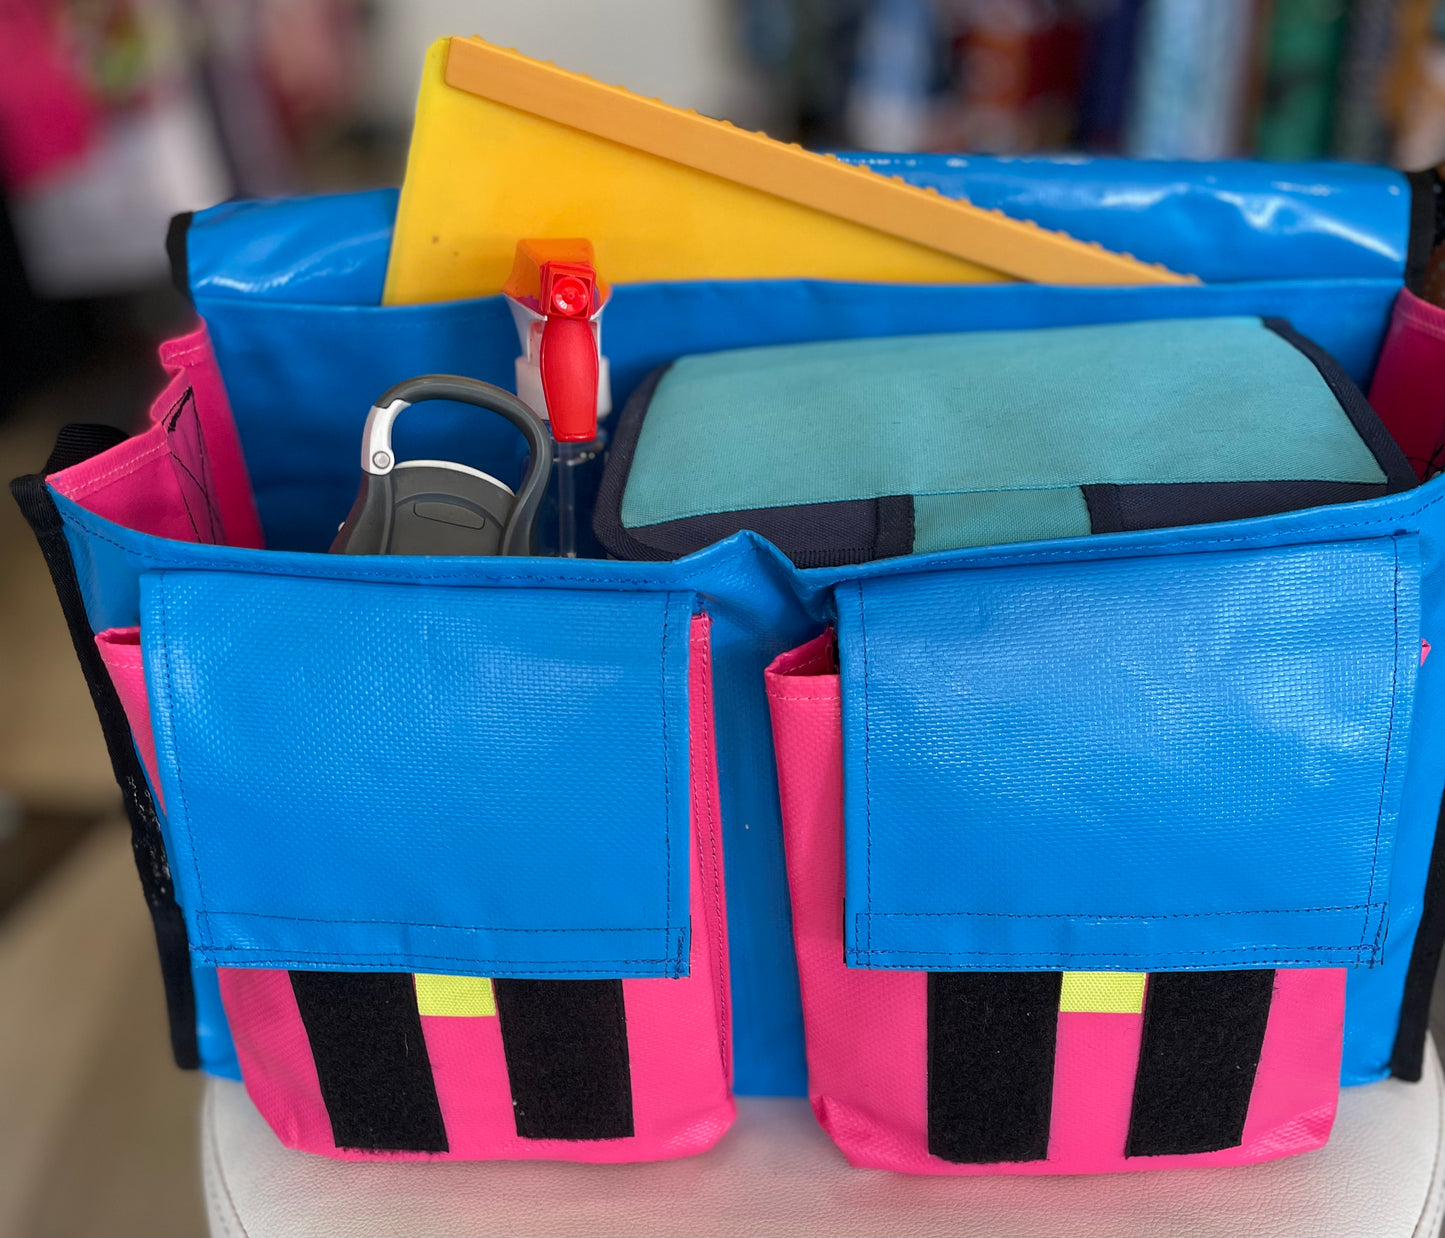 CribBags Medium Blue and Pink Crib bag. Tough Vinyl Construct 2 pockets outside, Document pockets inside